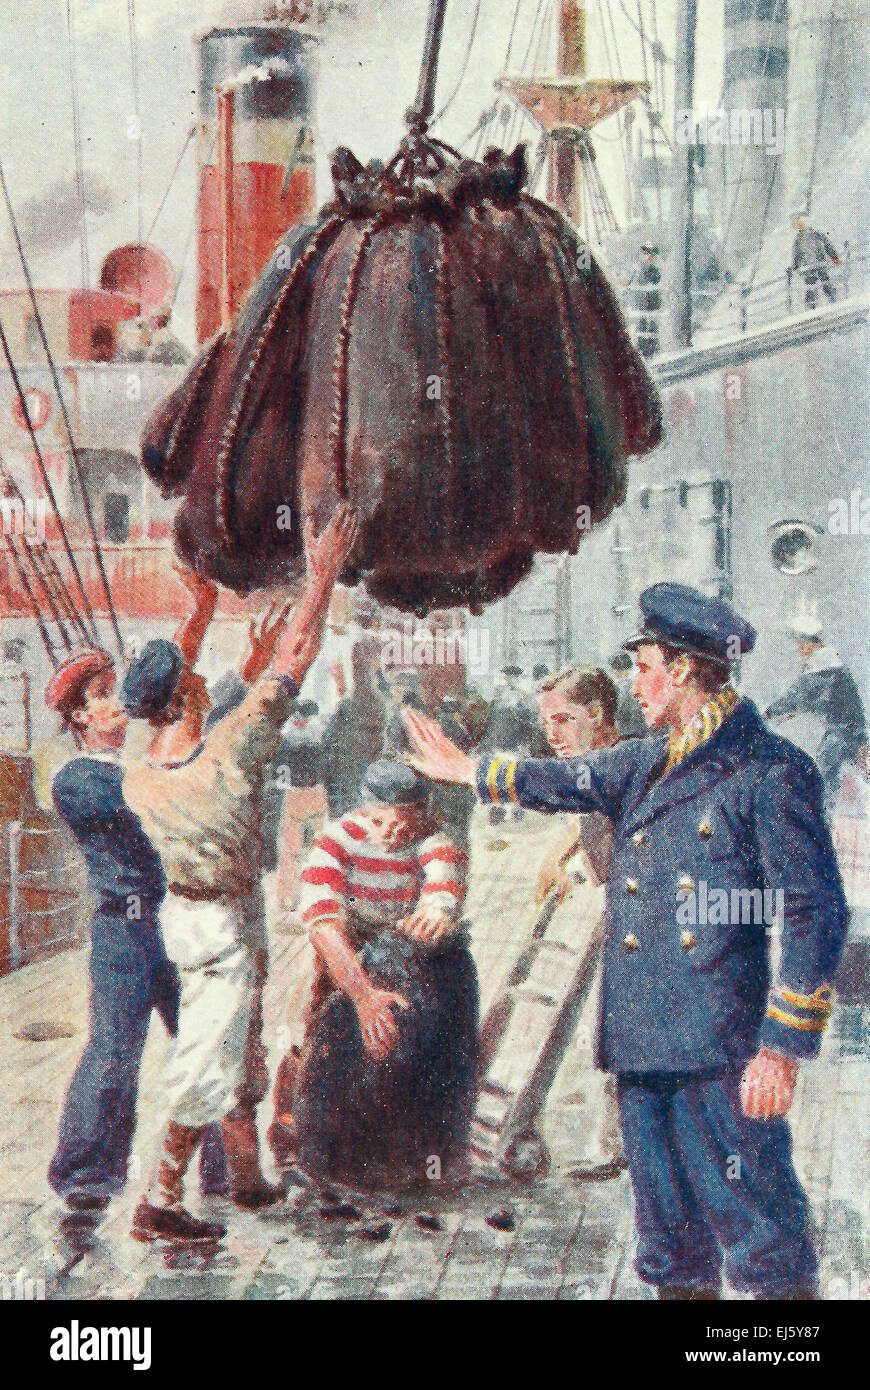 Coaling un navire - British Royal Navy - Bluejackets - WWI Banque D'Images